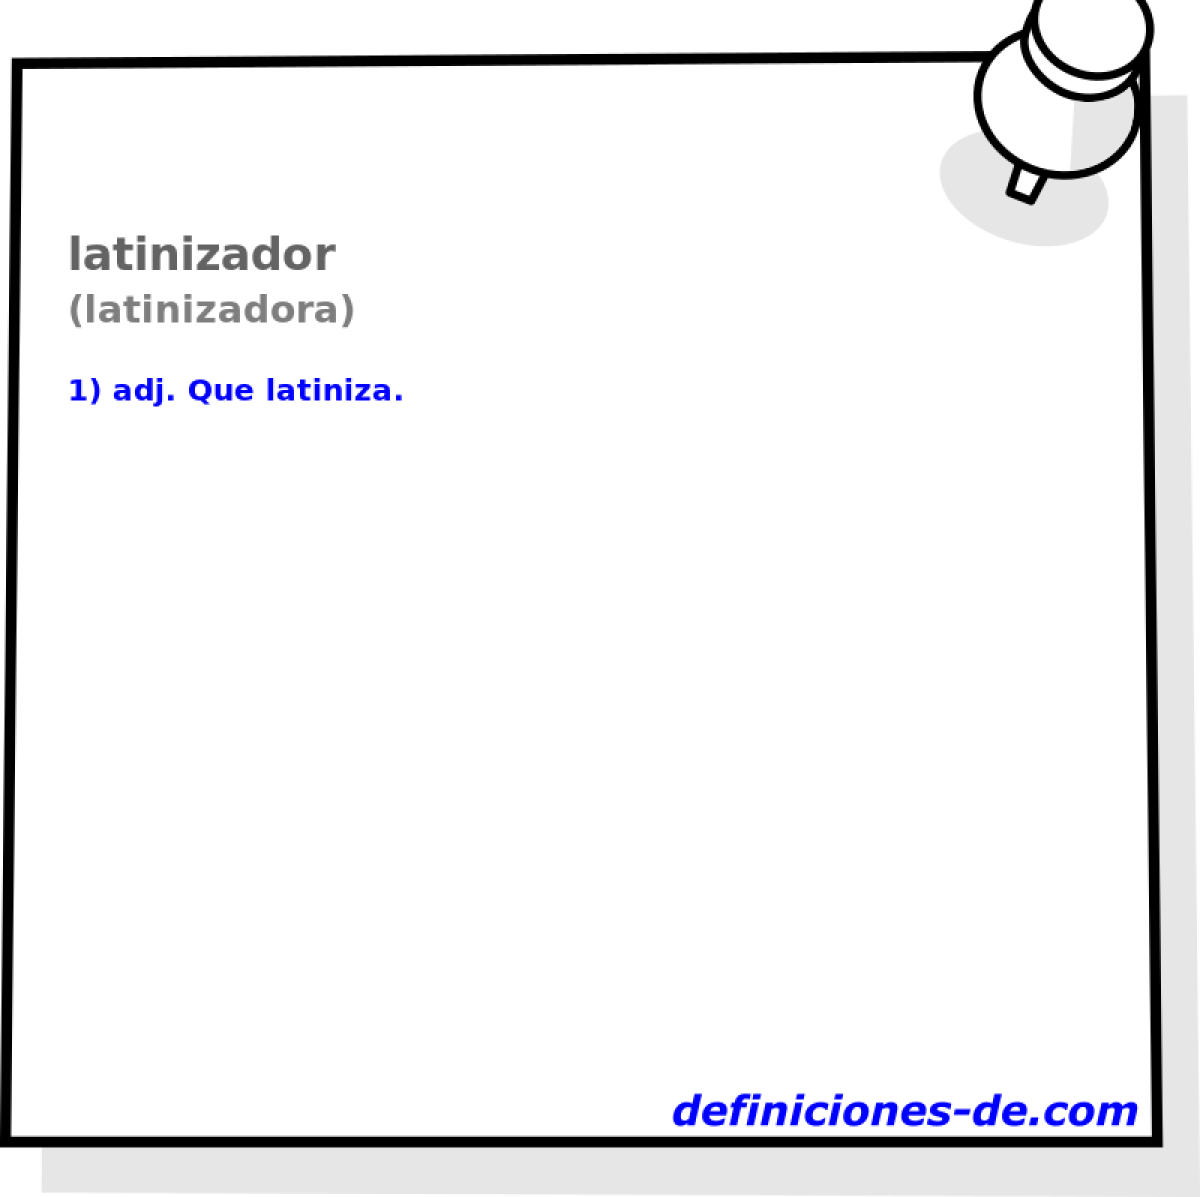 latinizador (latinizadora)